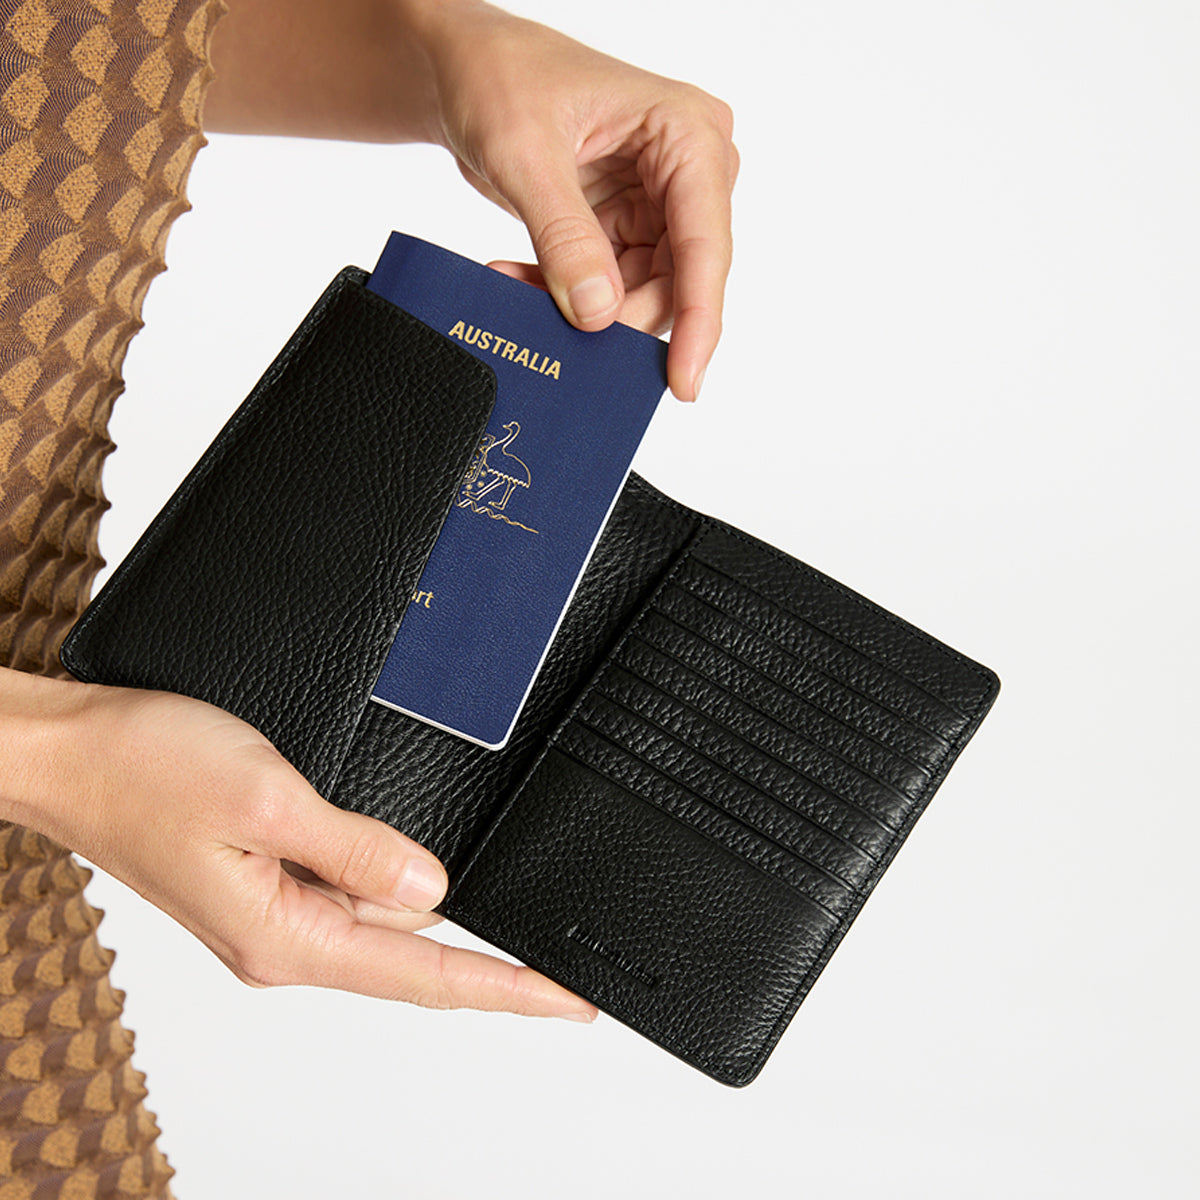 Status Anxiety In Transit Leather Passport Wallet Black